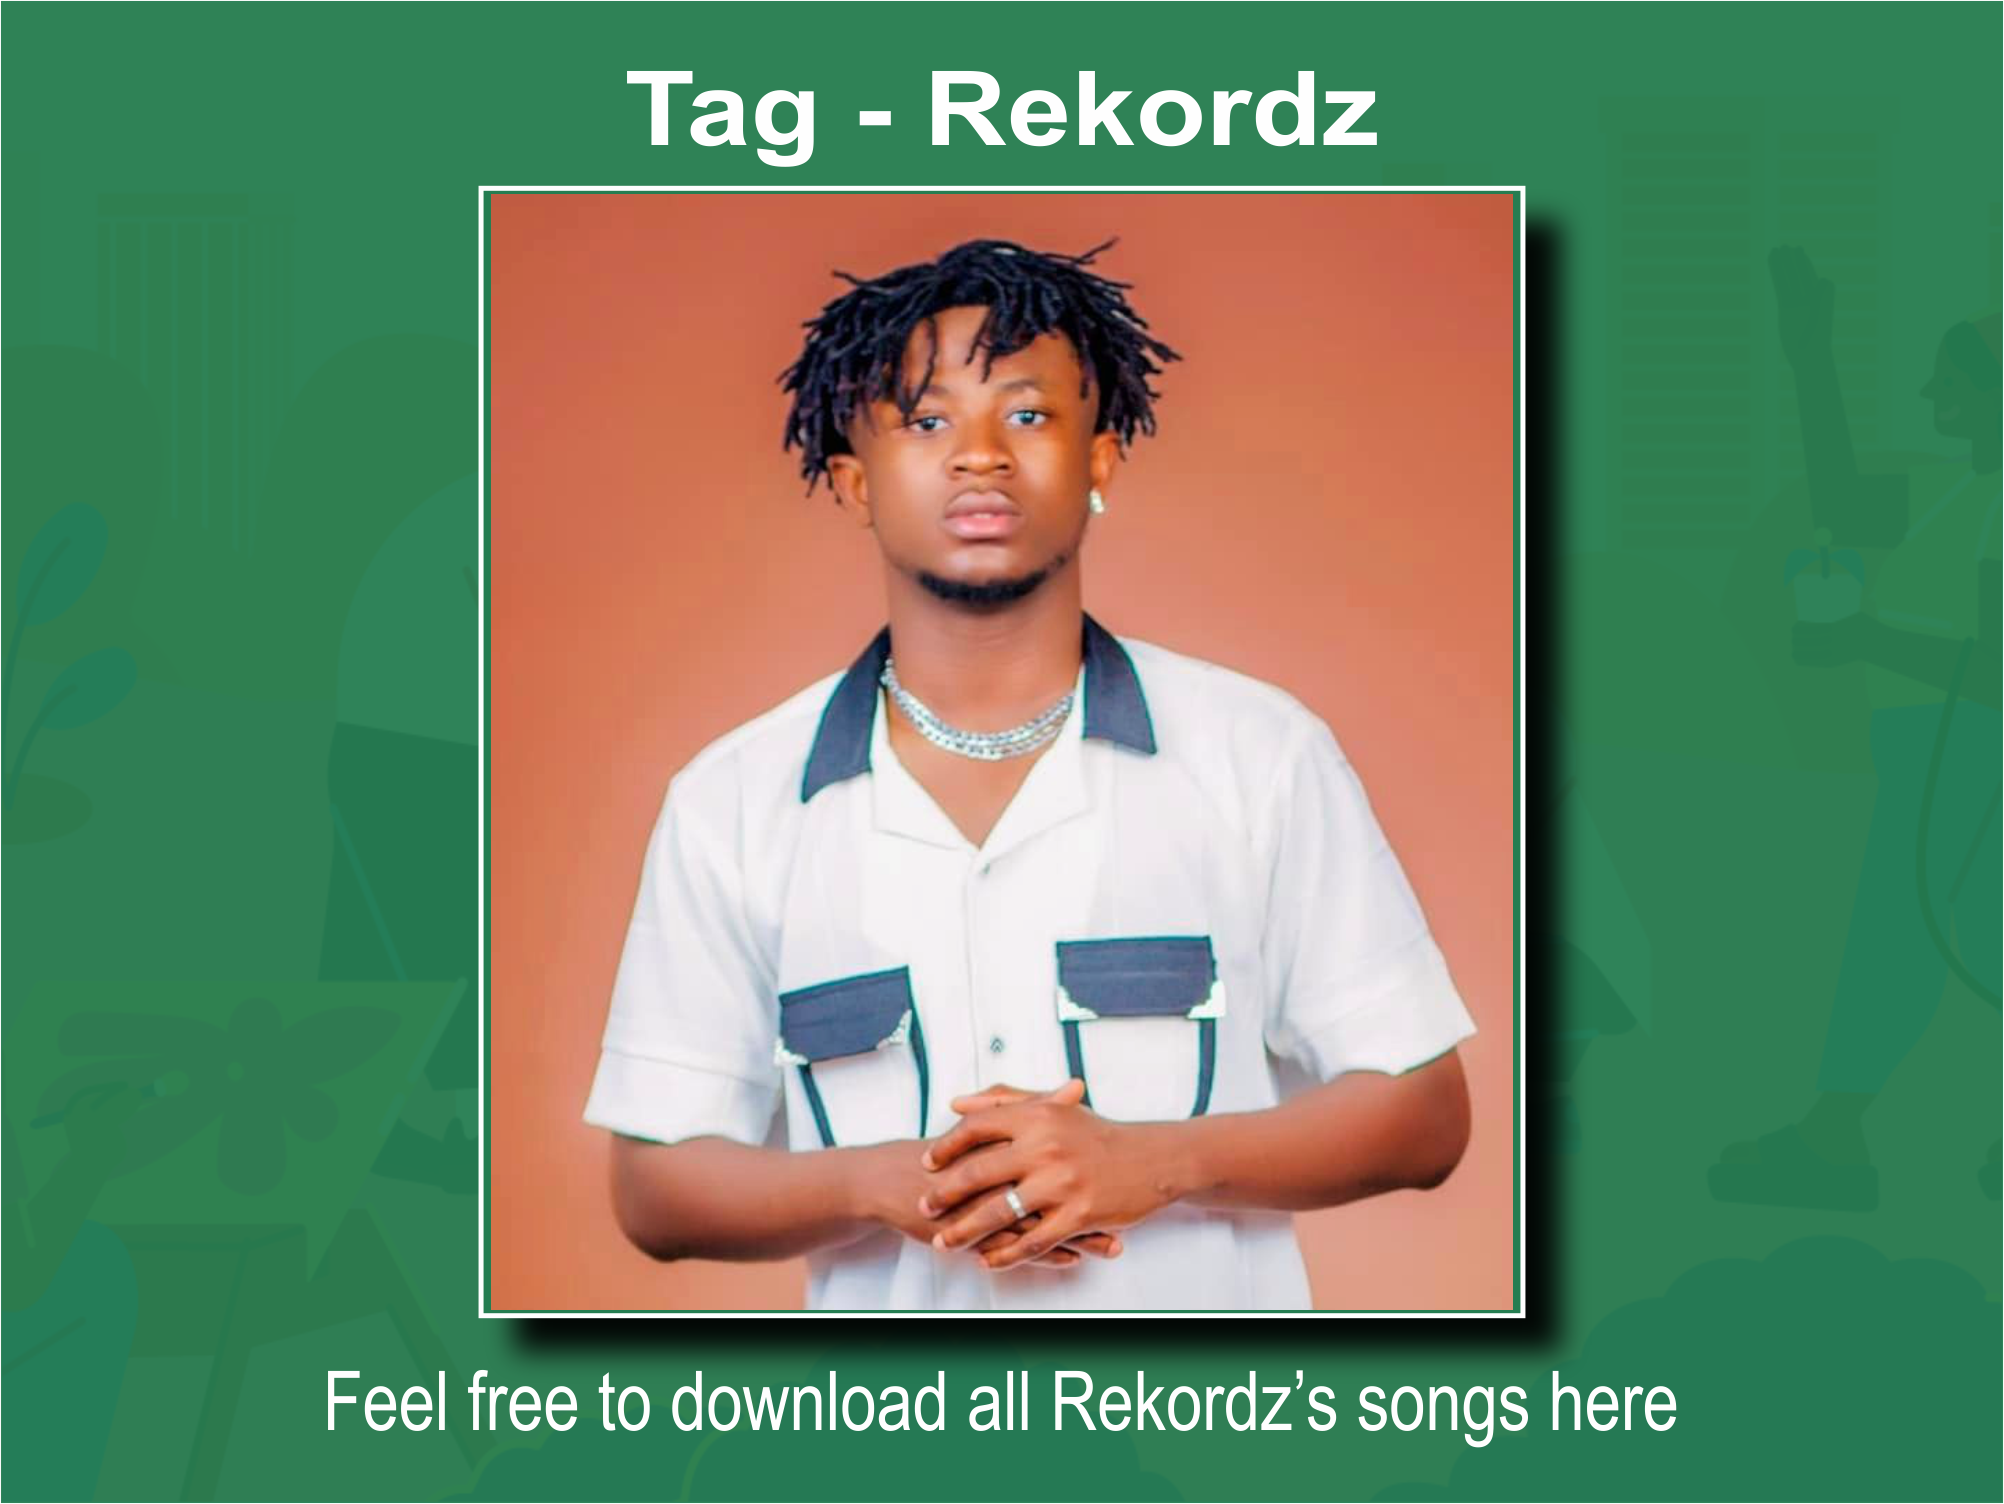 Download all Rekordz songs here